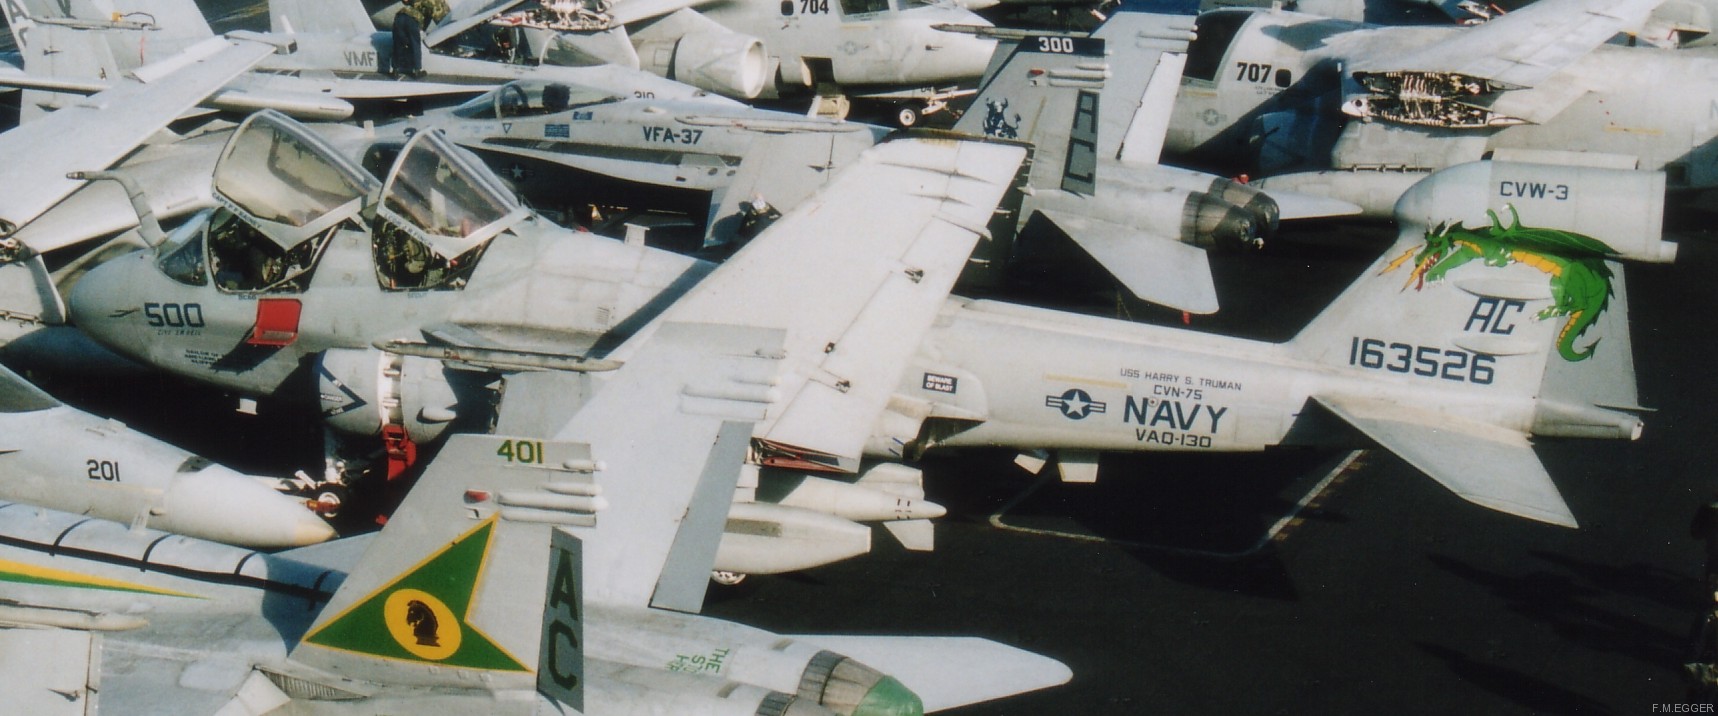 vaq-130 zappers electronic attack squadron vaqron us navy grumman ea-6b prowler aircraft carrier air wing cvw-3 uss harry s. truman cvn-75 142